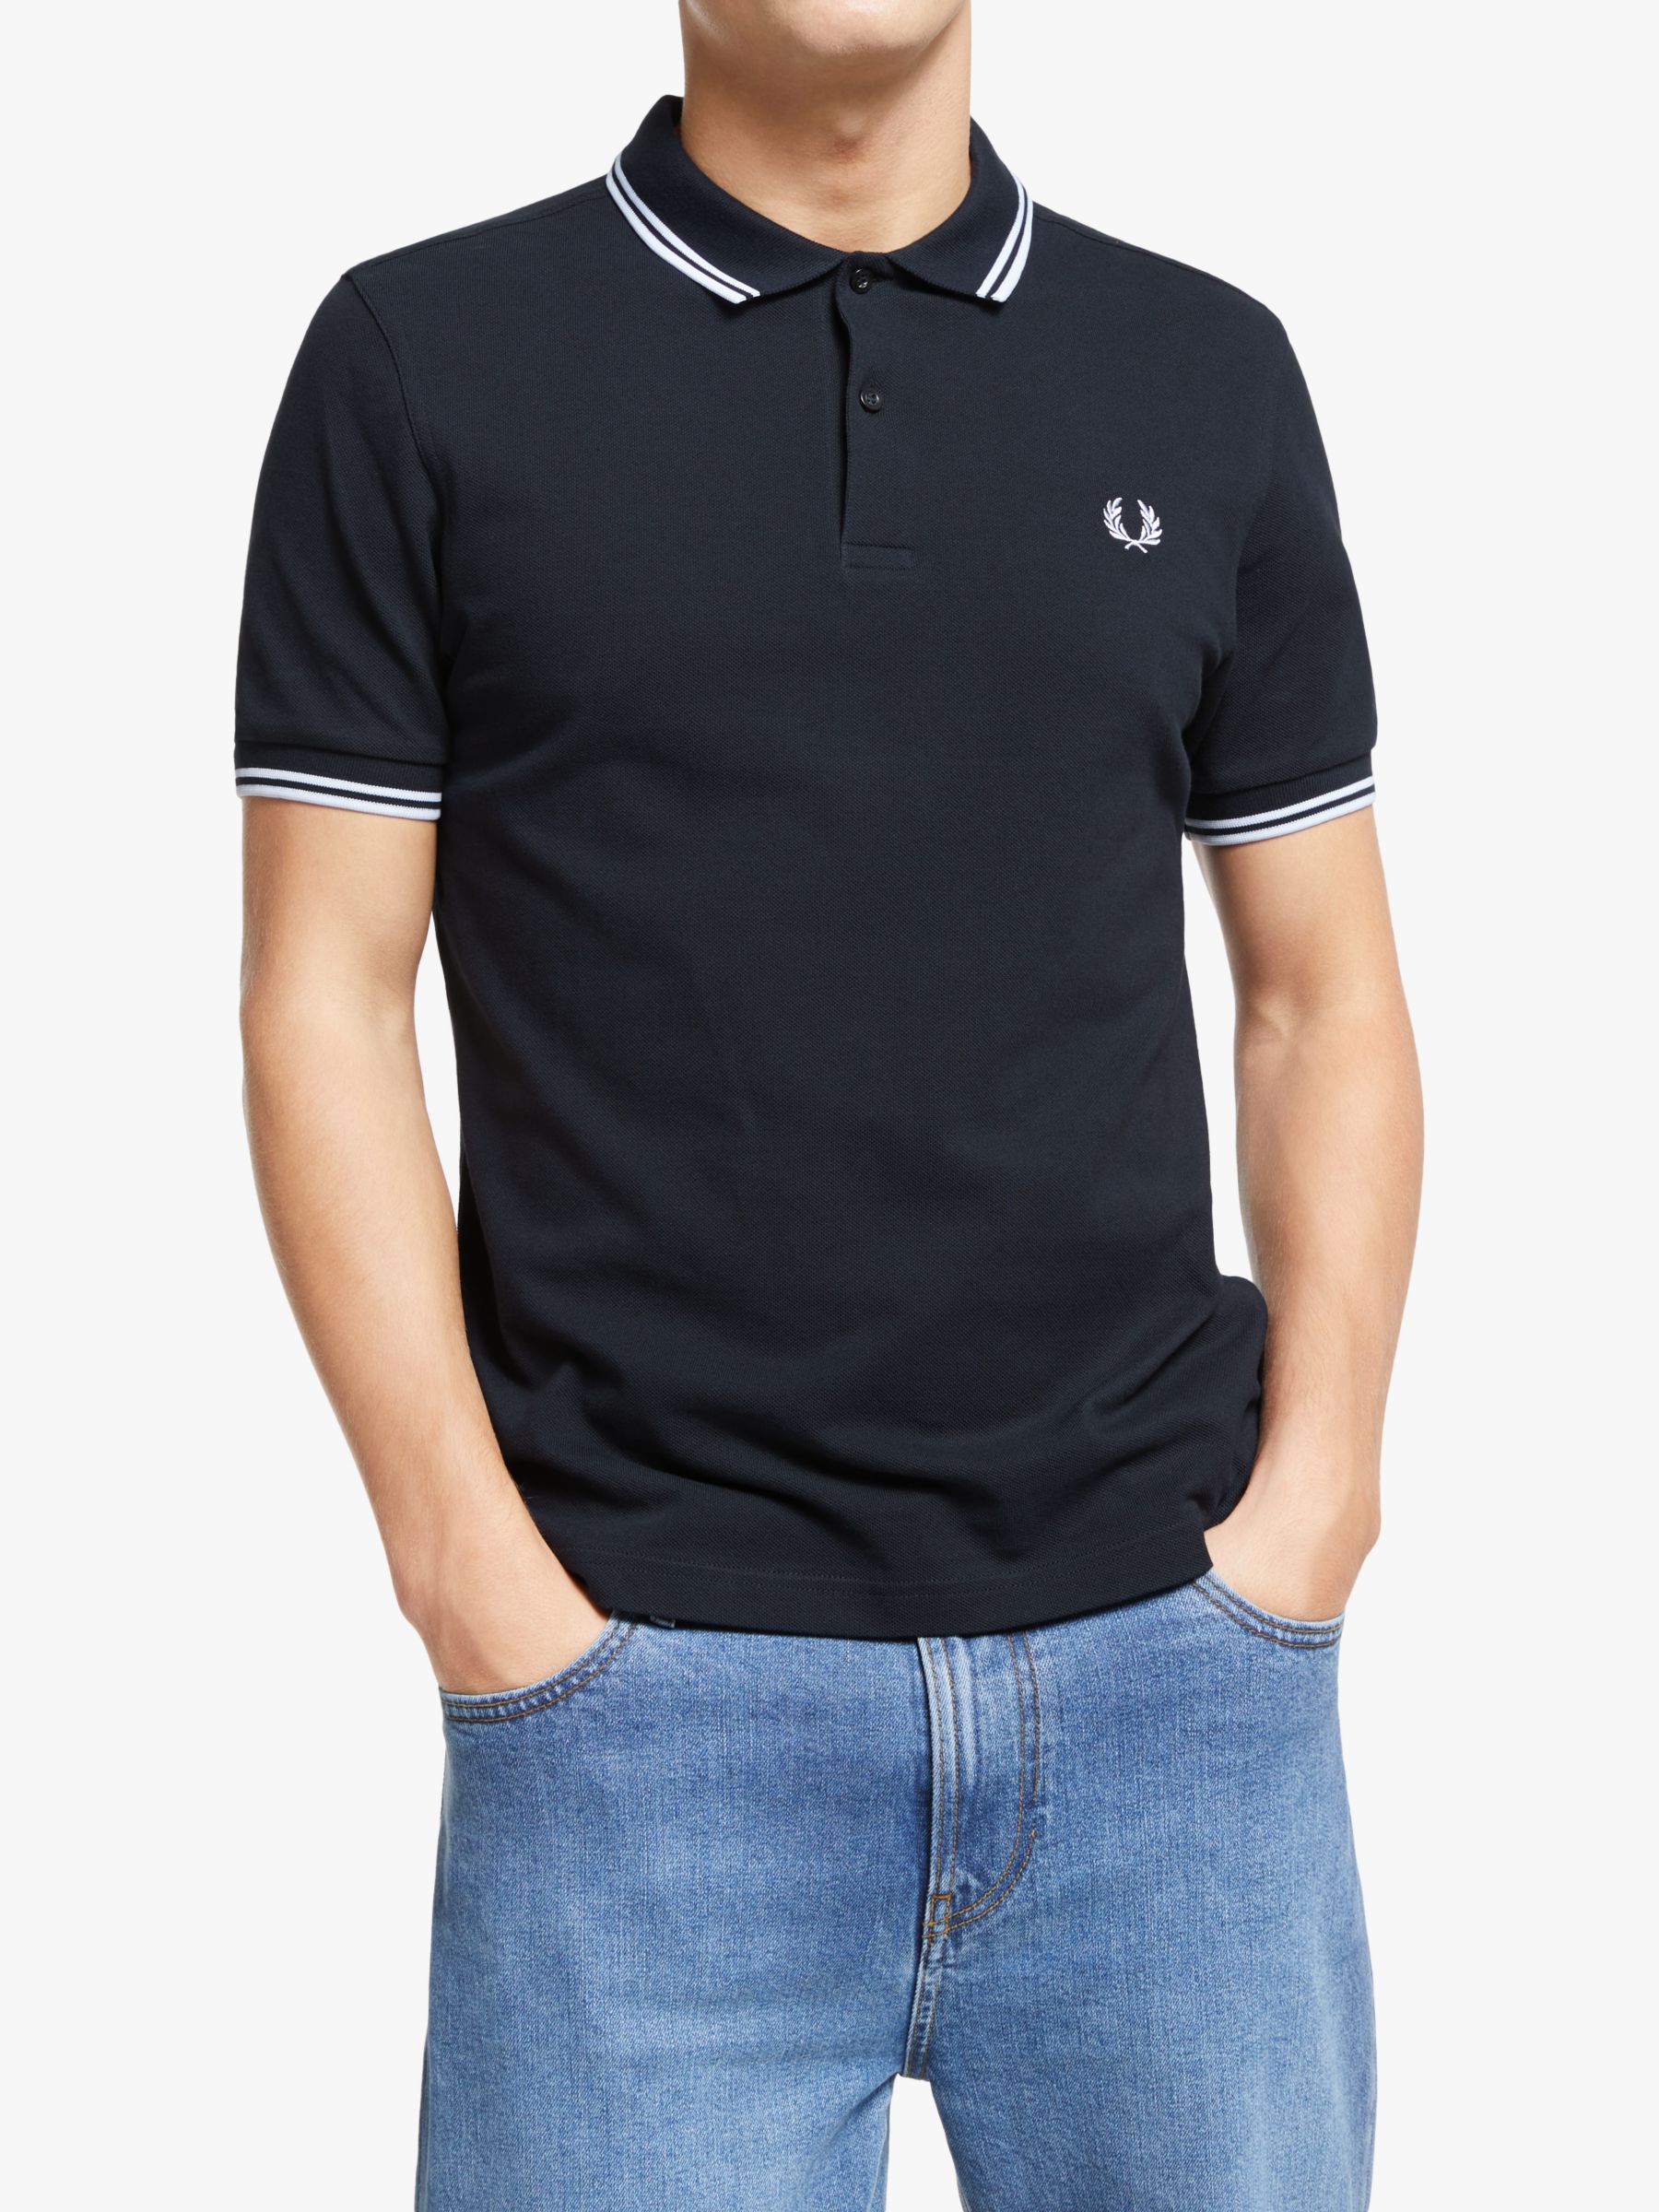 Рубашка поло стандартного кроя с двумя кончиками Fred Perry, темно-синий/белый рубашка fred perry utility overshirt цвет gunmetal